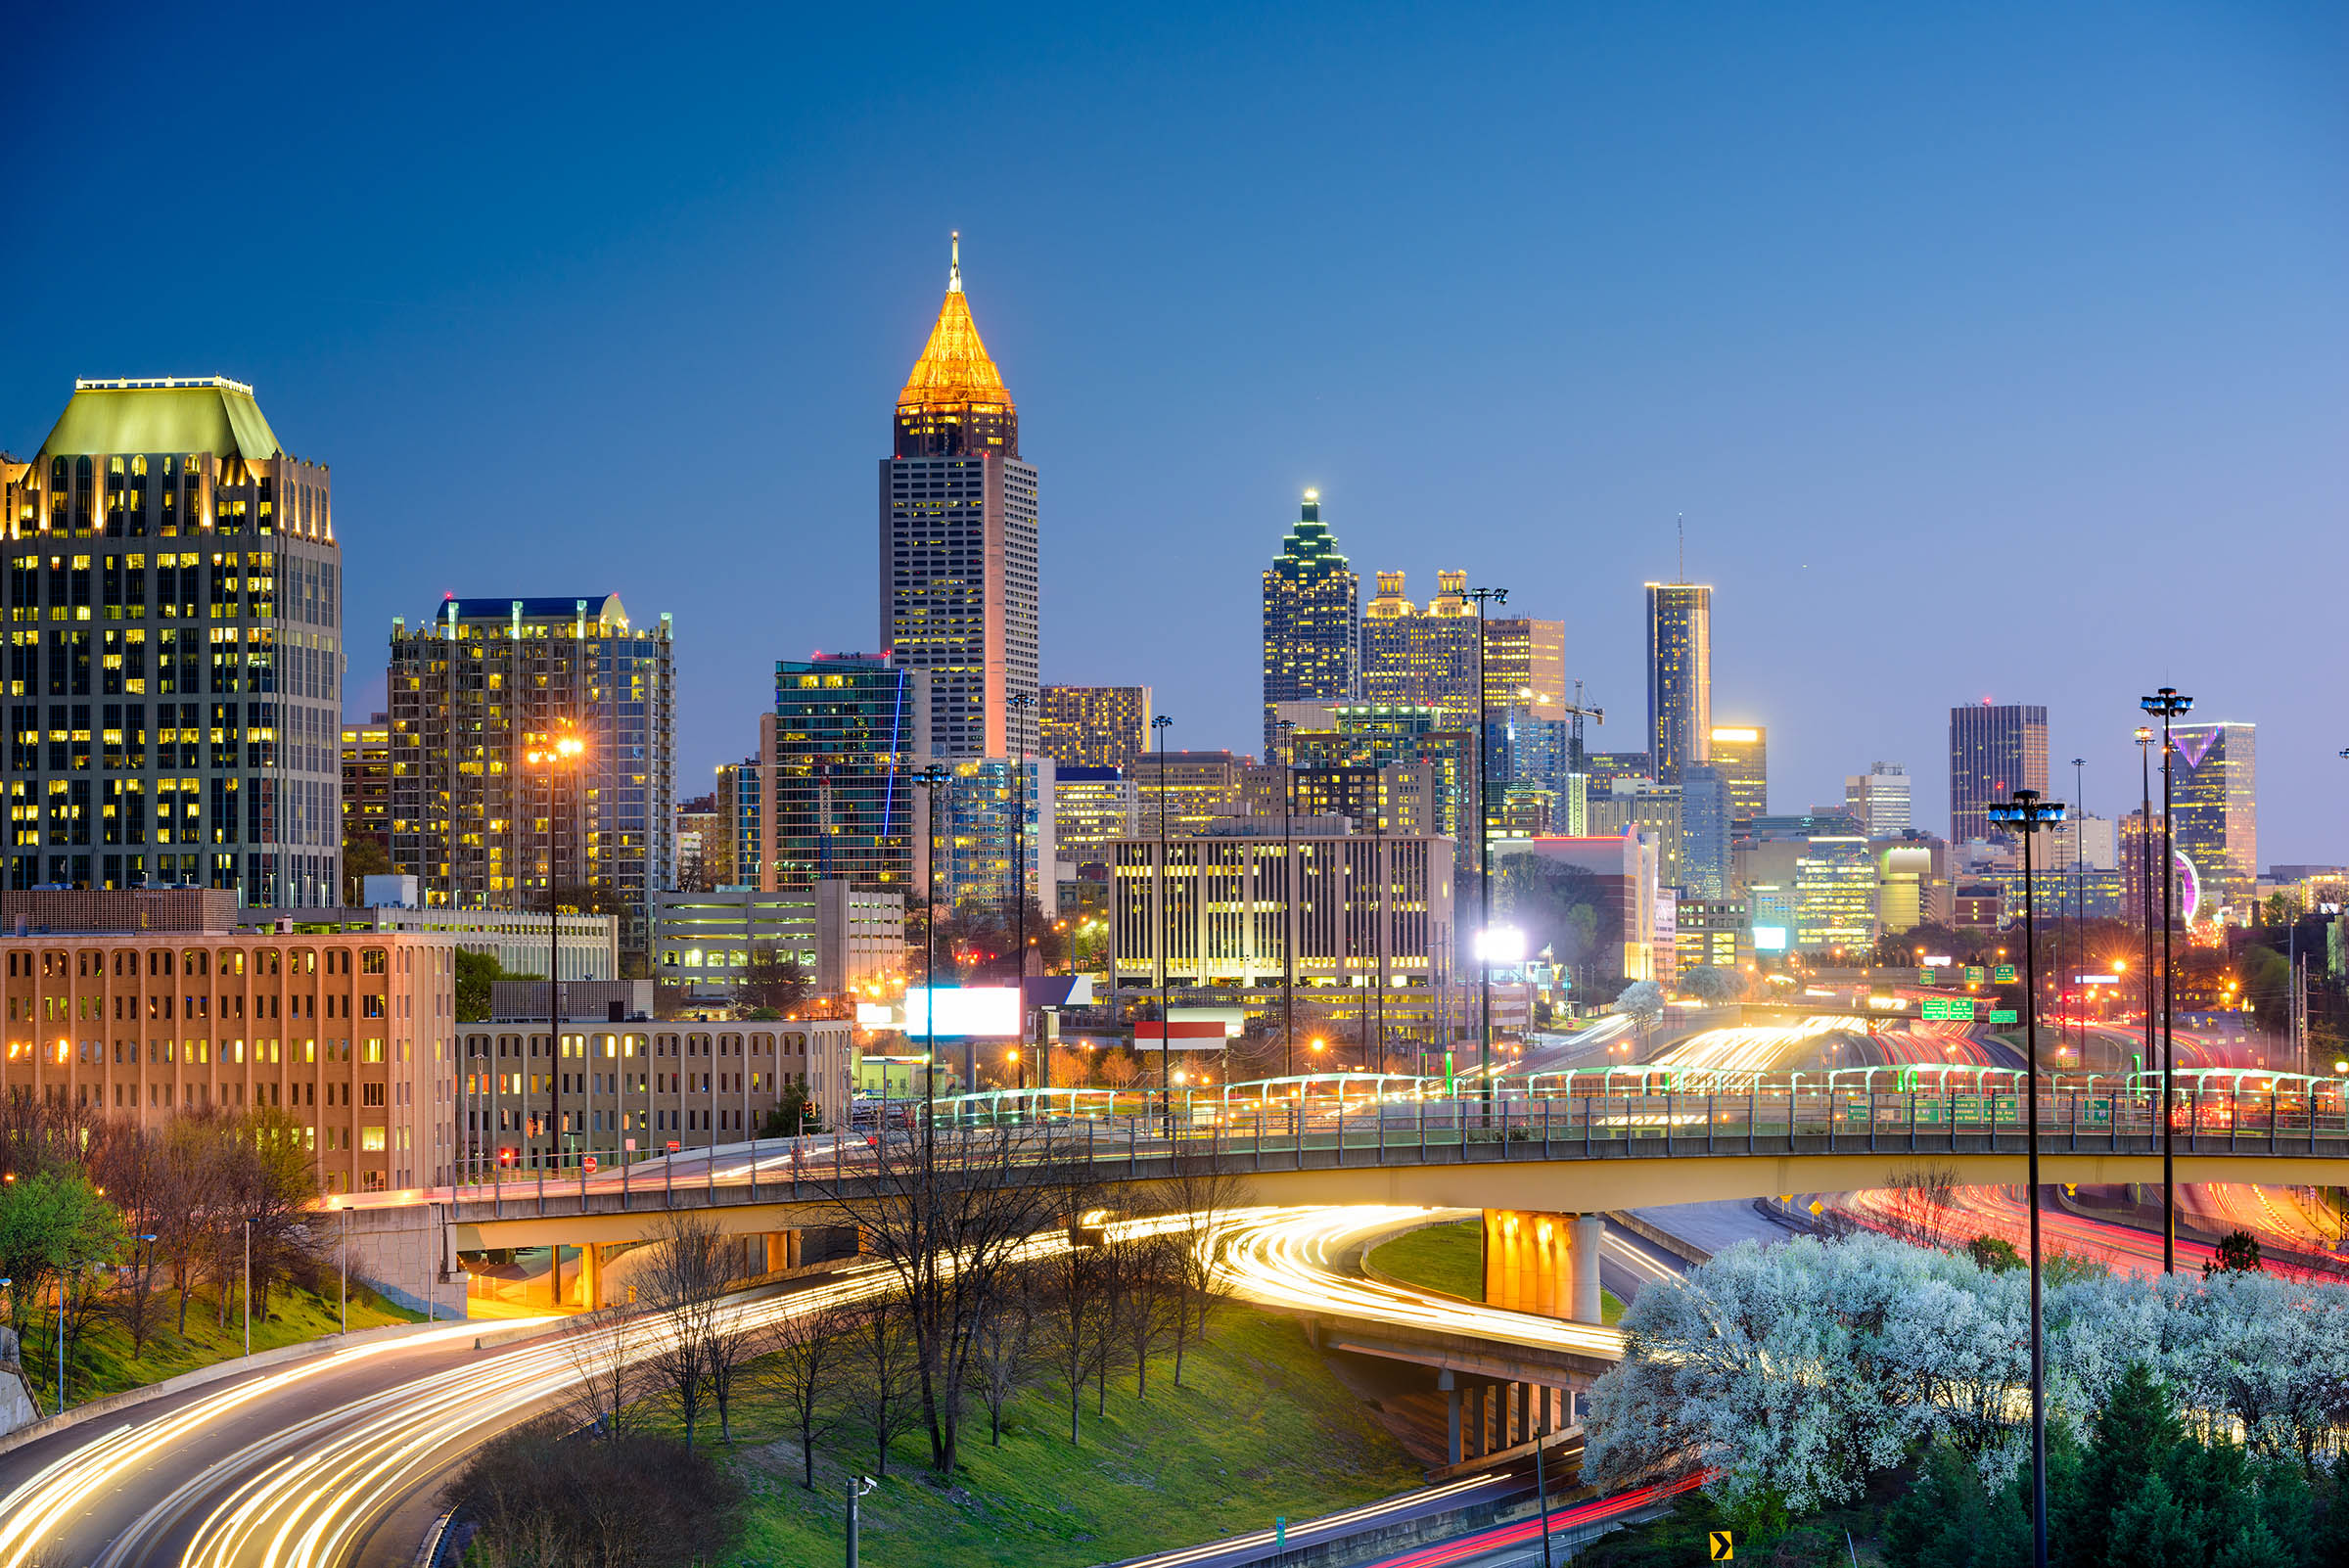 City of Atlanta Smart Utility Program